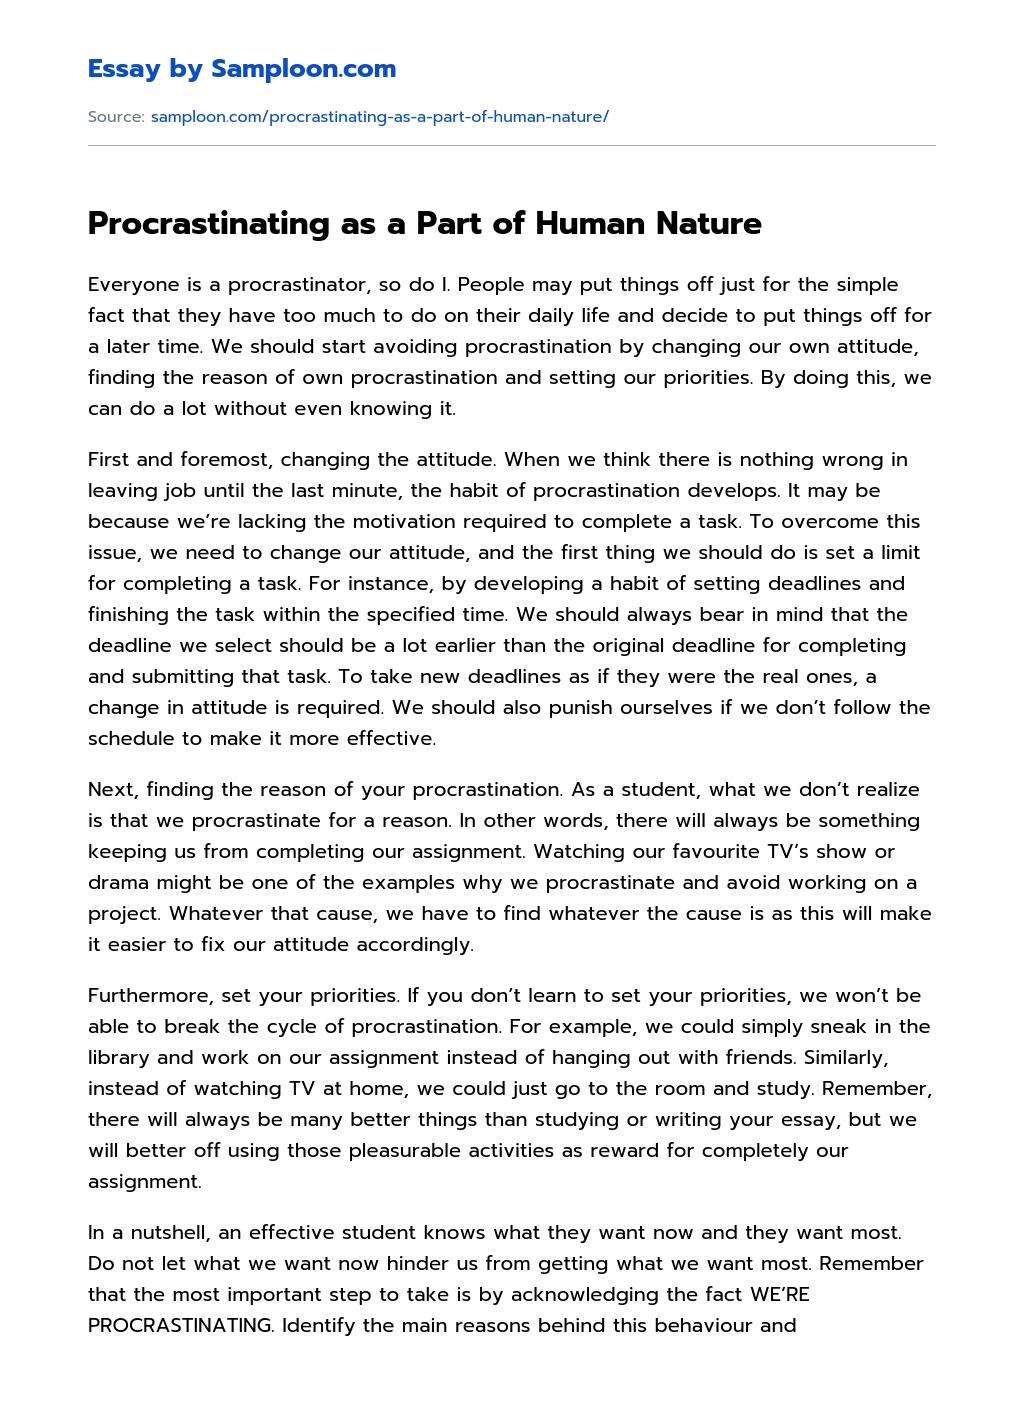 Procrastinating as a Part of Human Nature essay